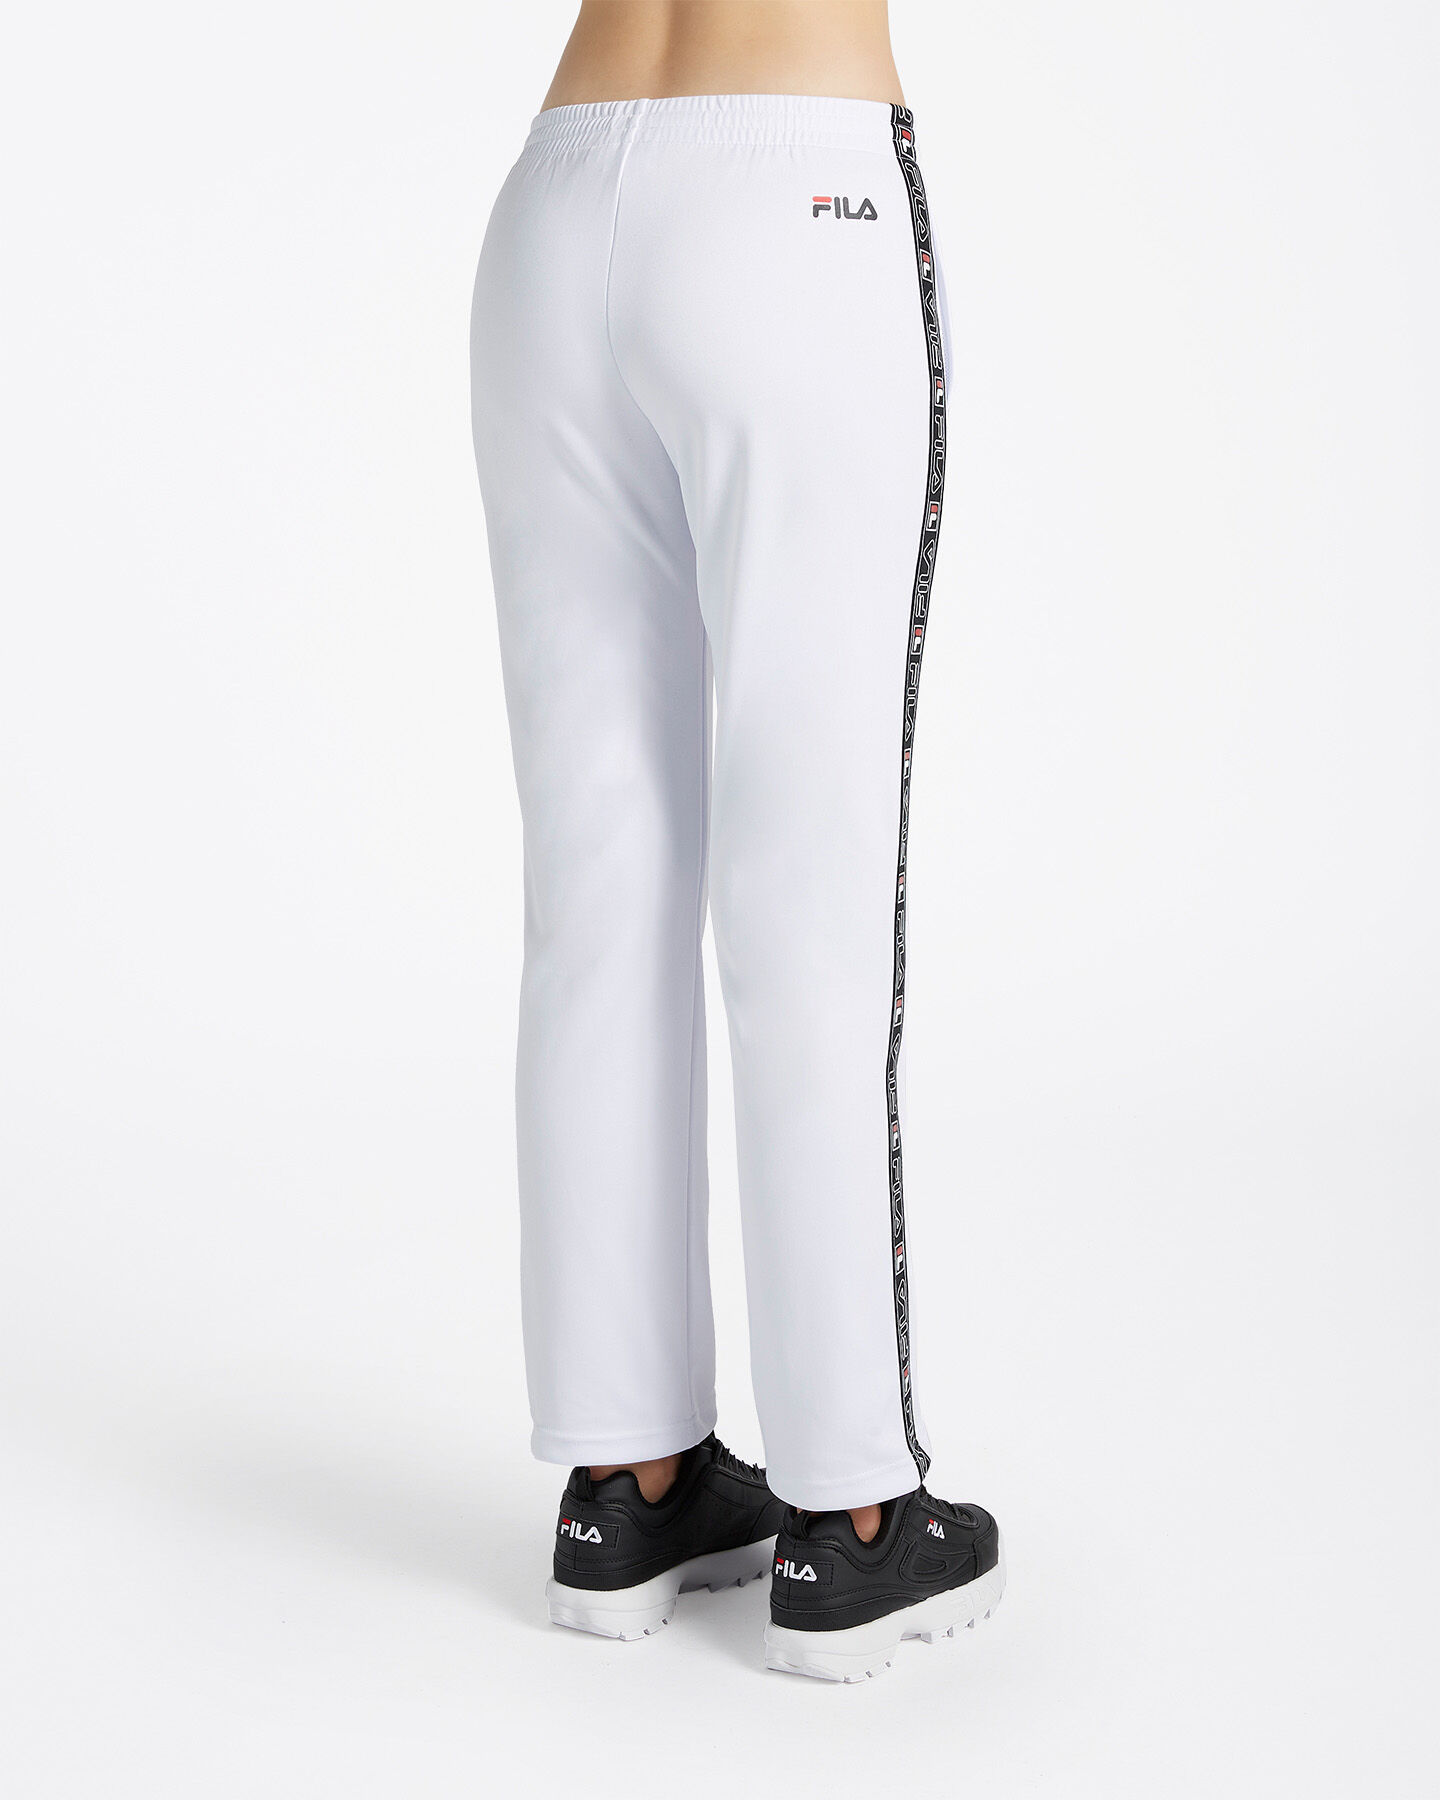  Pantalone FILA CLASSIC BAND W S4071268|001|XS scatto 1